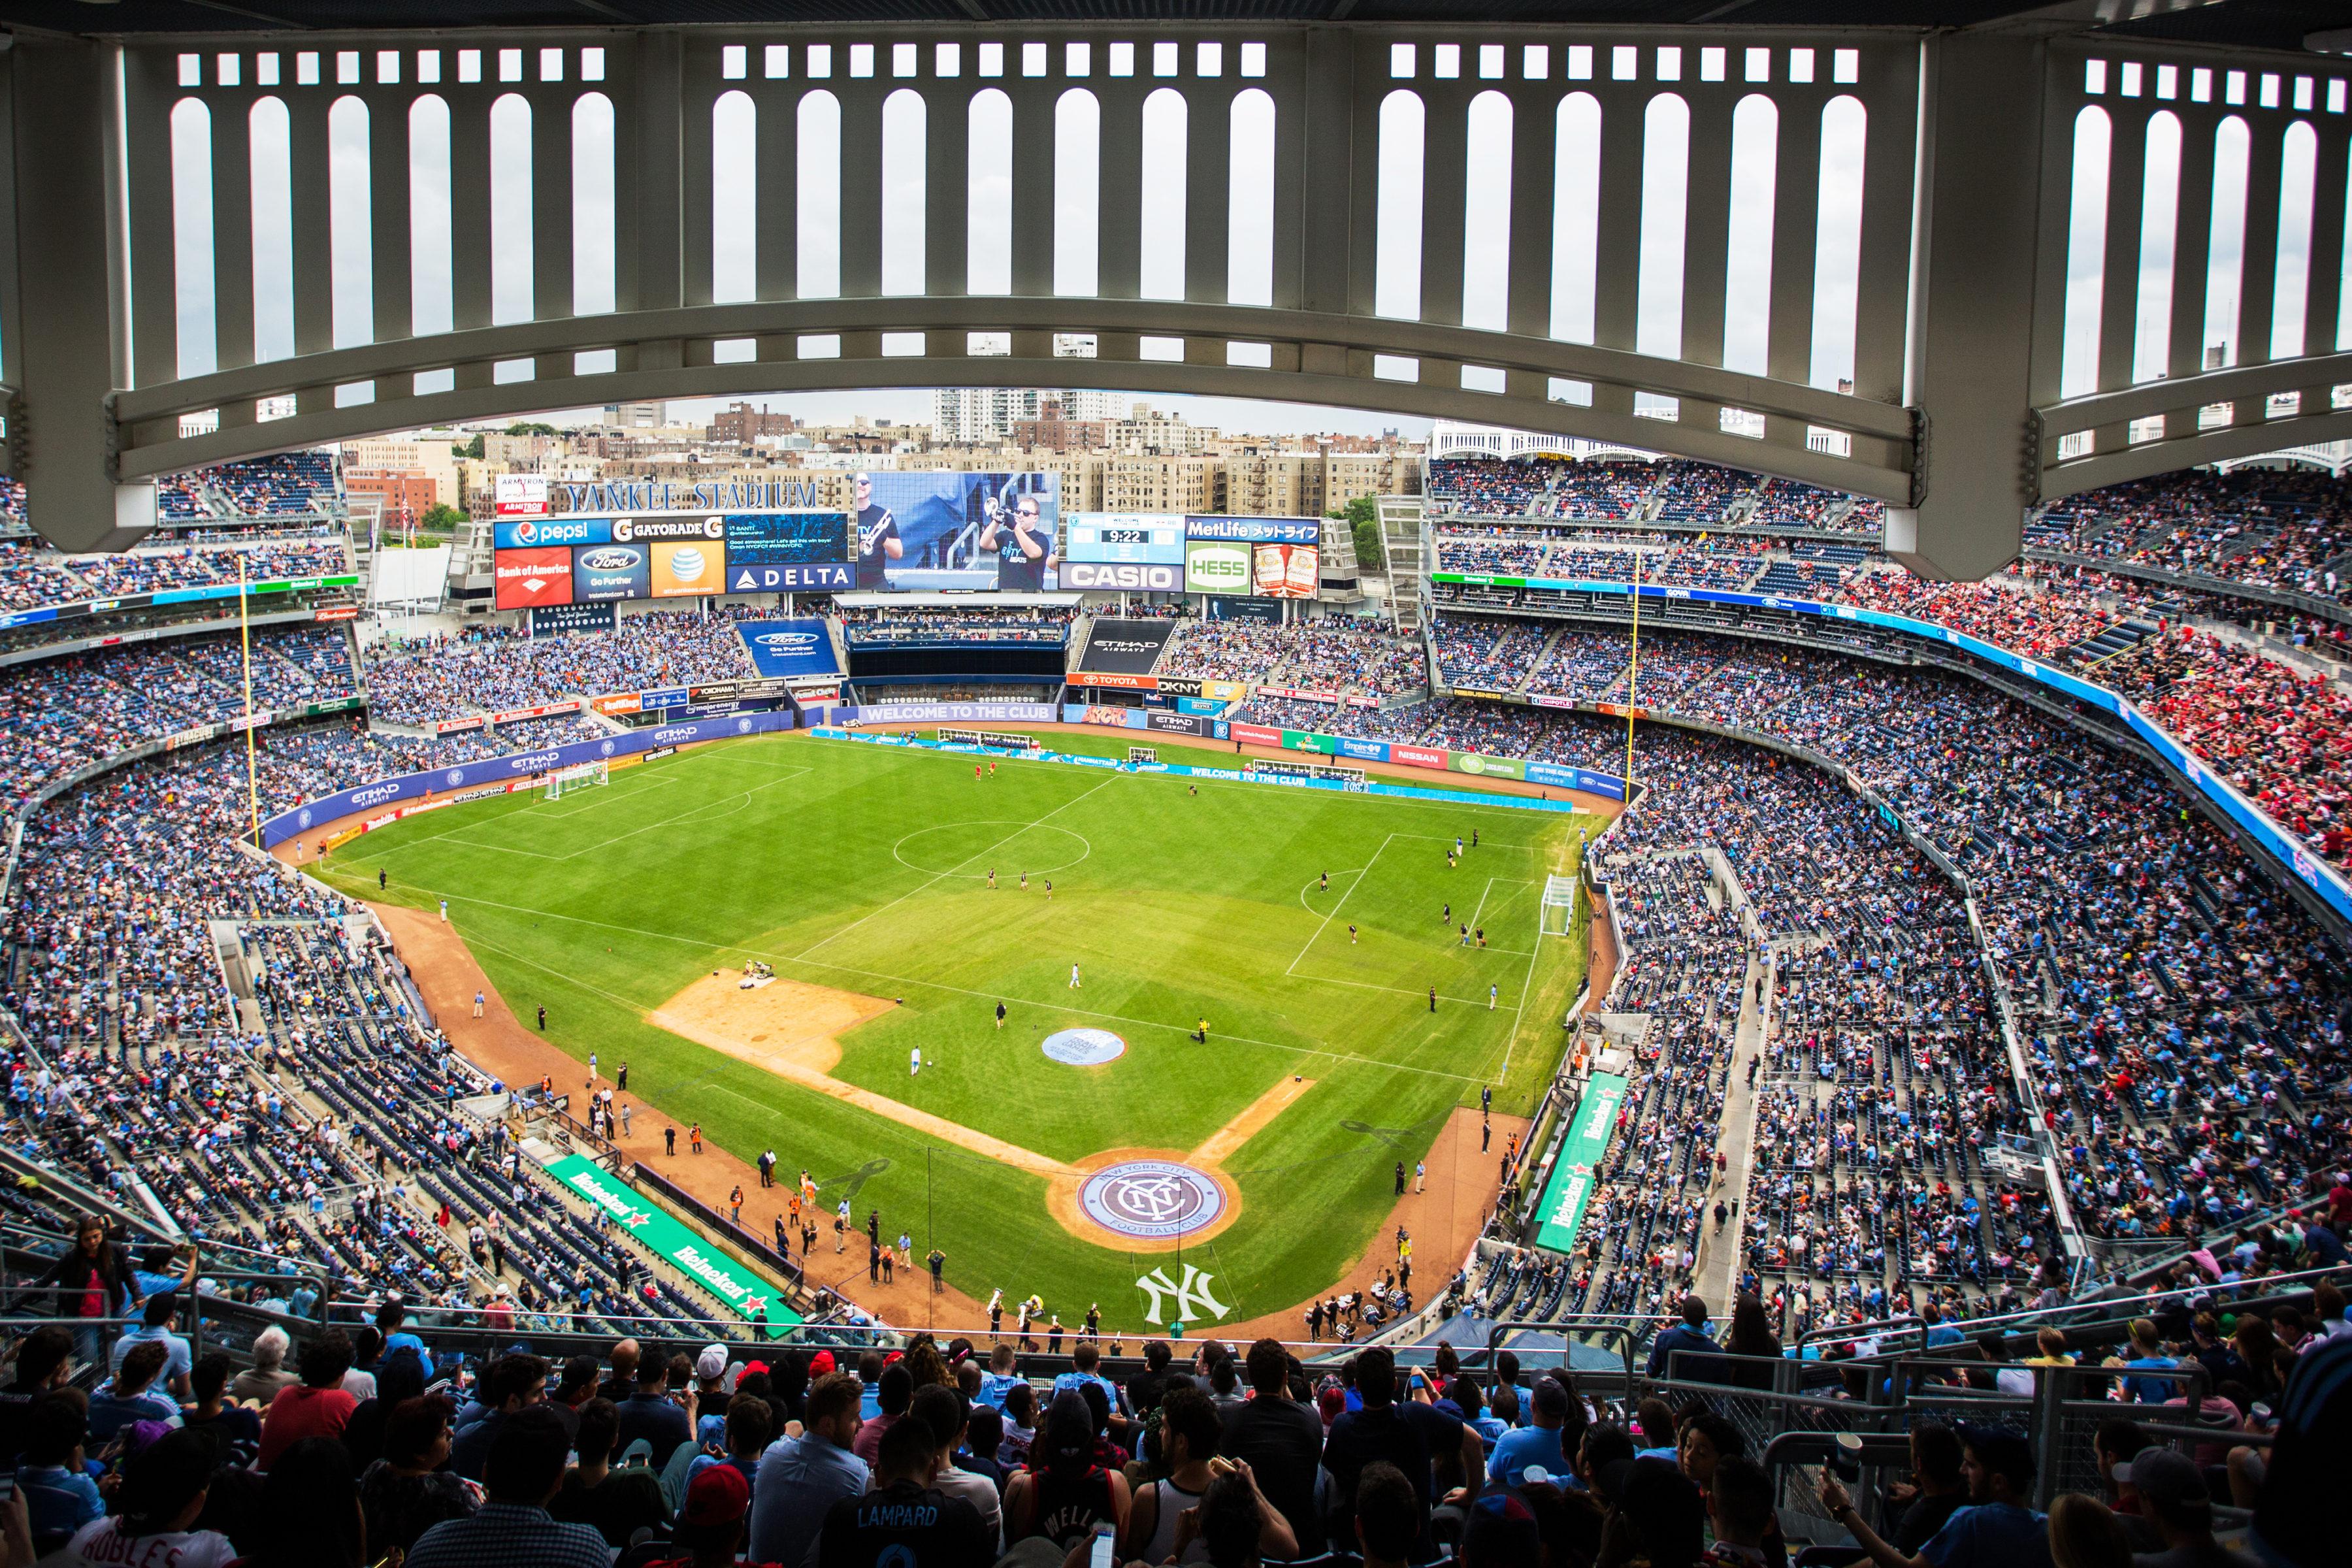 New York City FC Bronx stadium on life support? - Soccer Stadium Digest